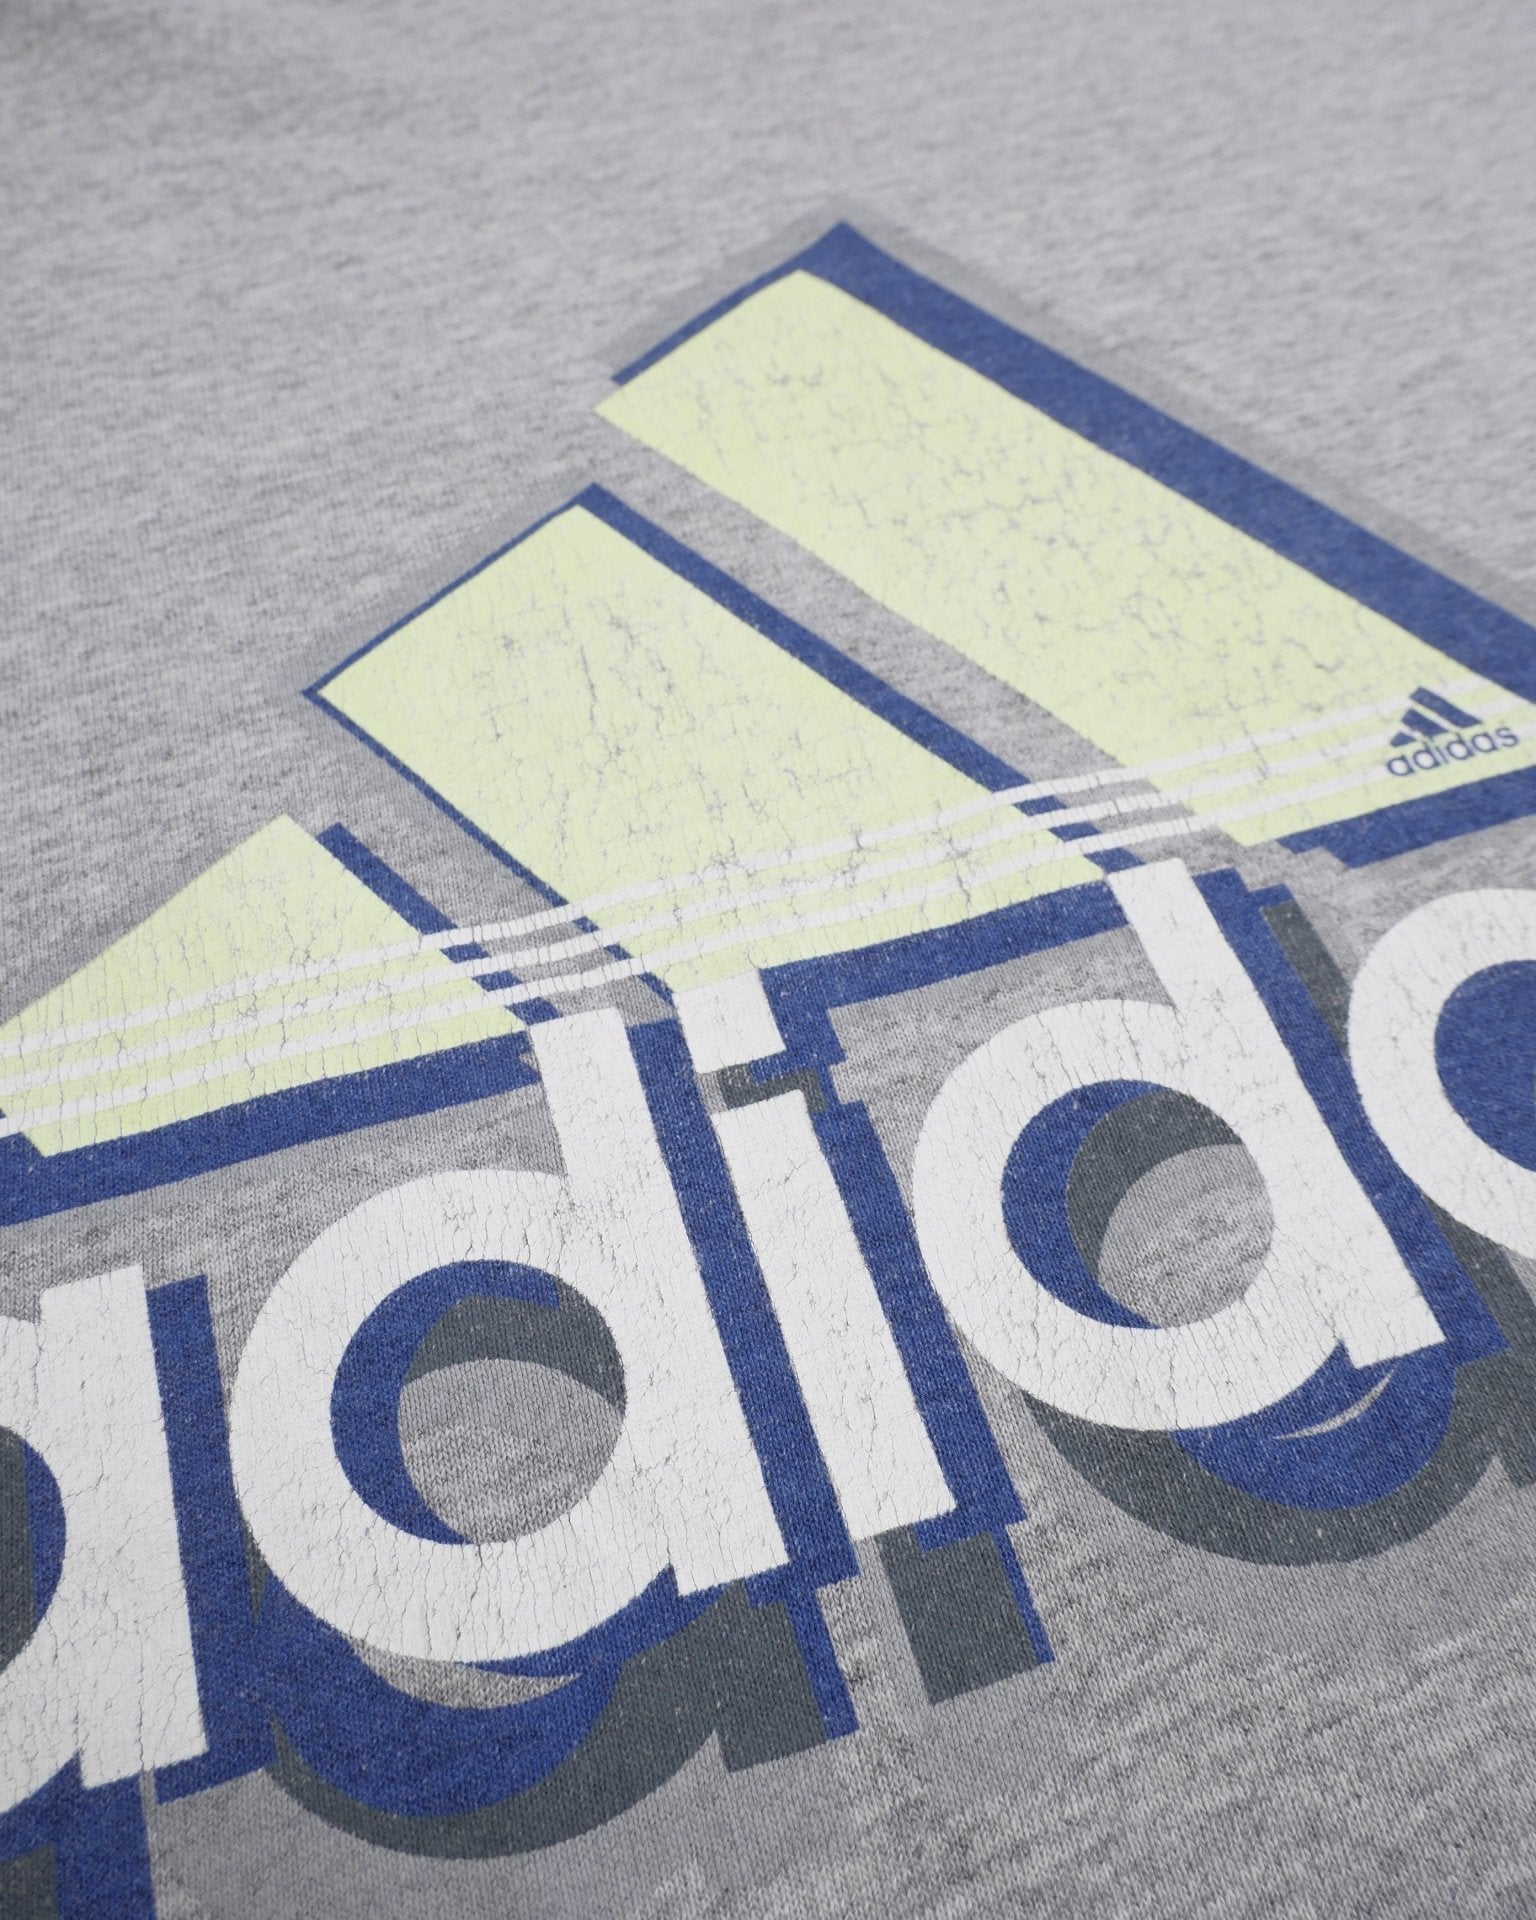 Adidas printed Logo Vintage Shirt - Peeces